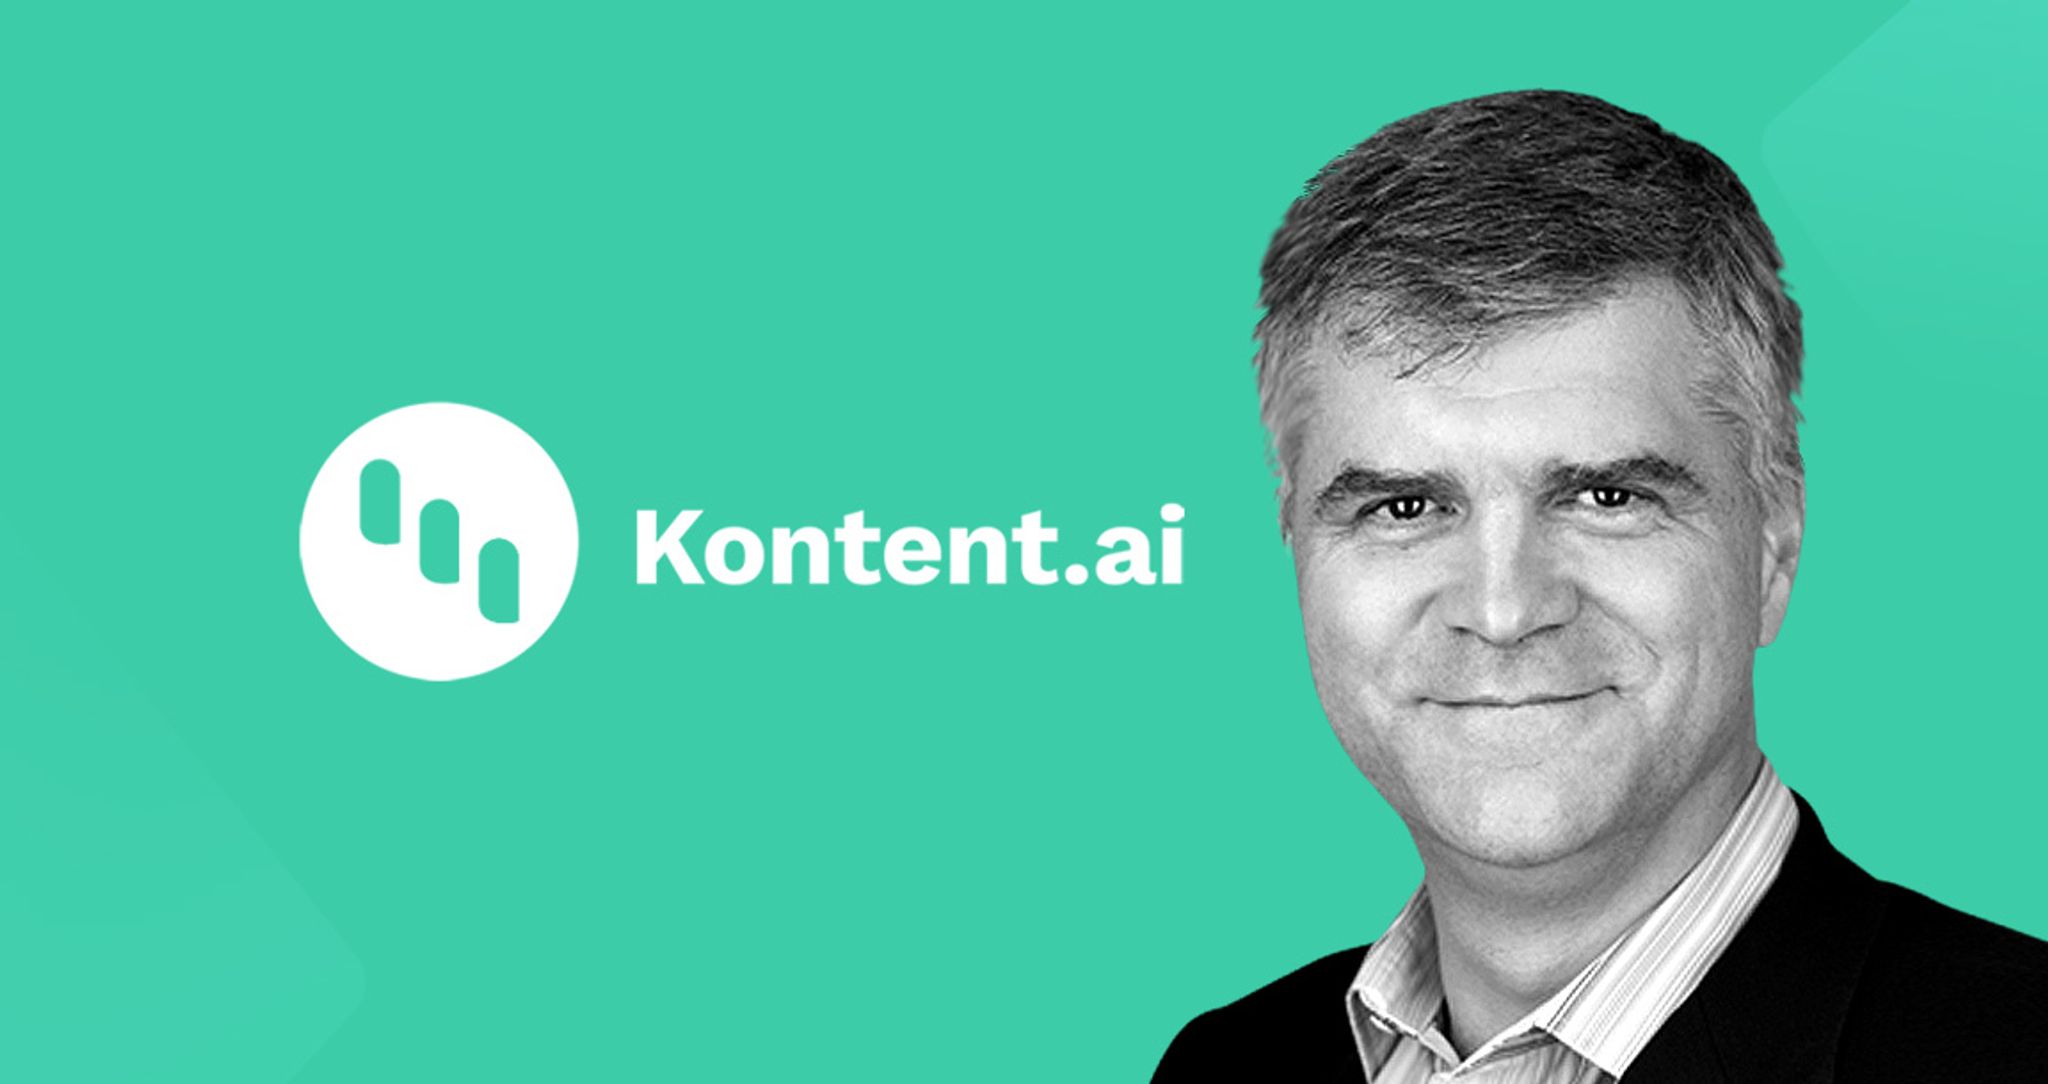 Heashot of Mark Ruddock, CEO of Kontent.ai and logo